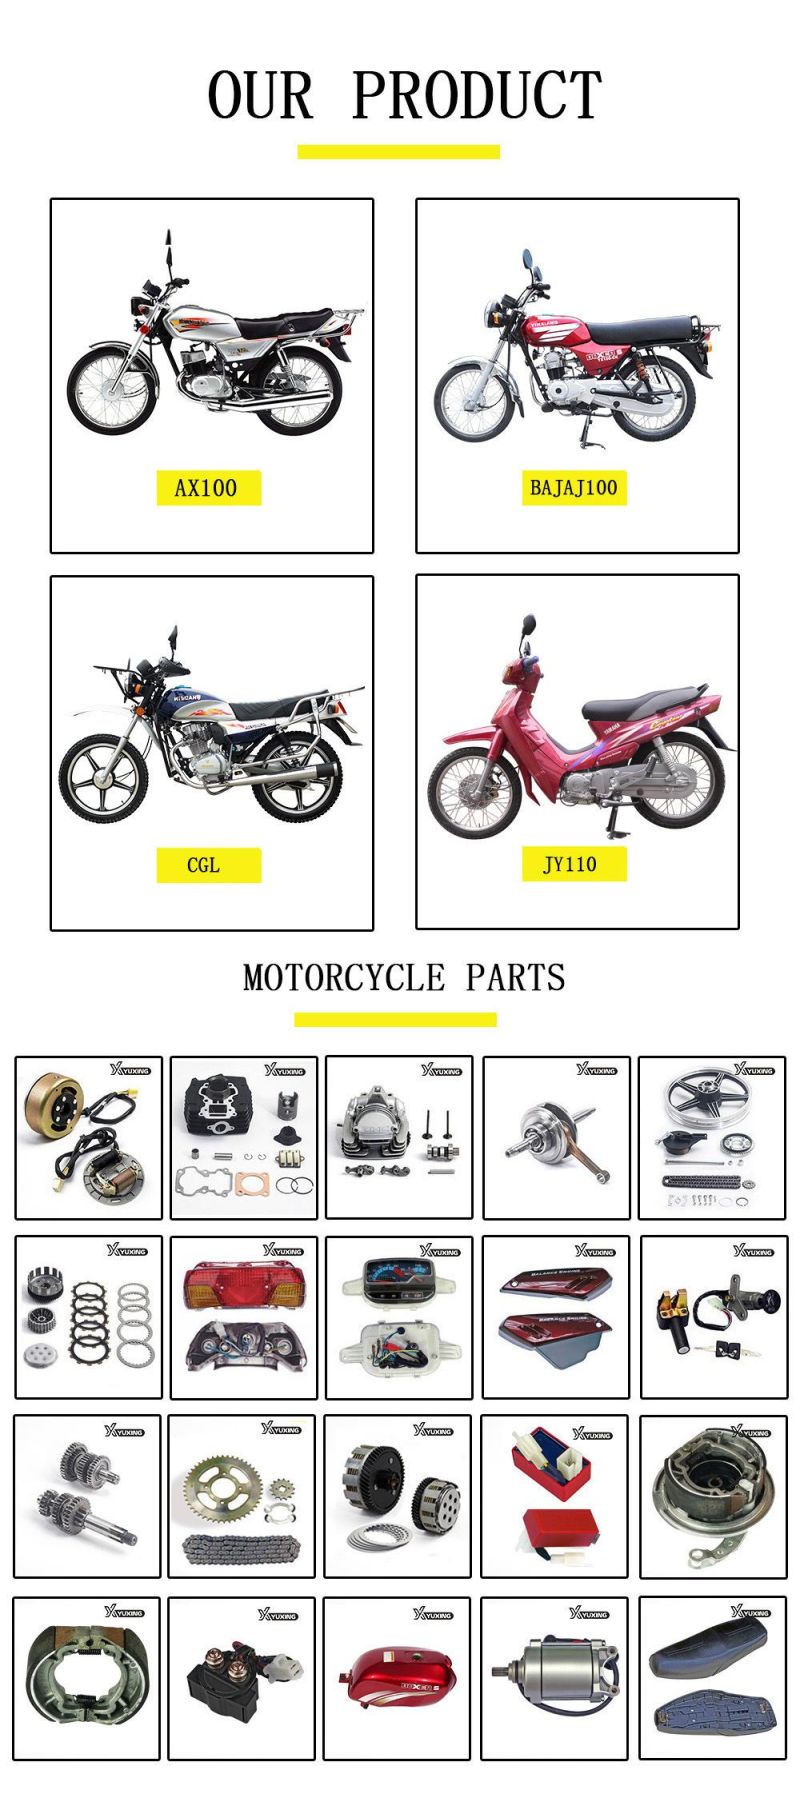 Motorcycle Engine Parts Cylinder Head, Carburetor, Camshaft, Clutch, Motorcycle Parts